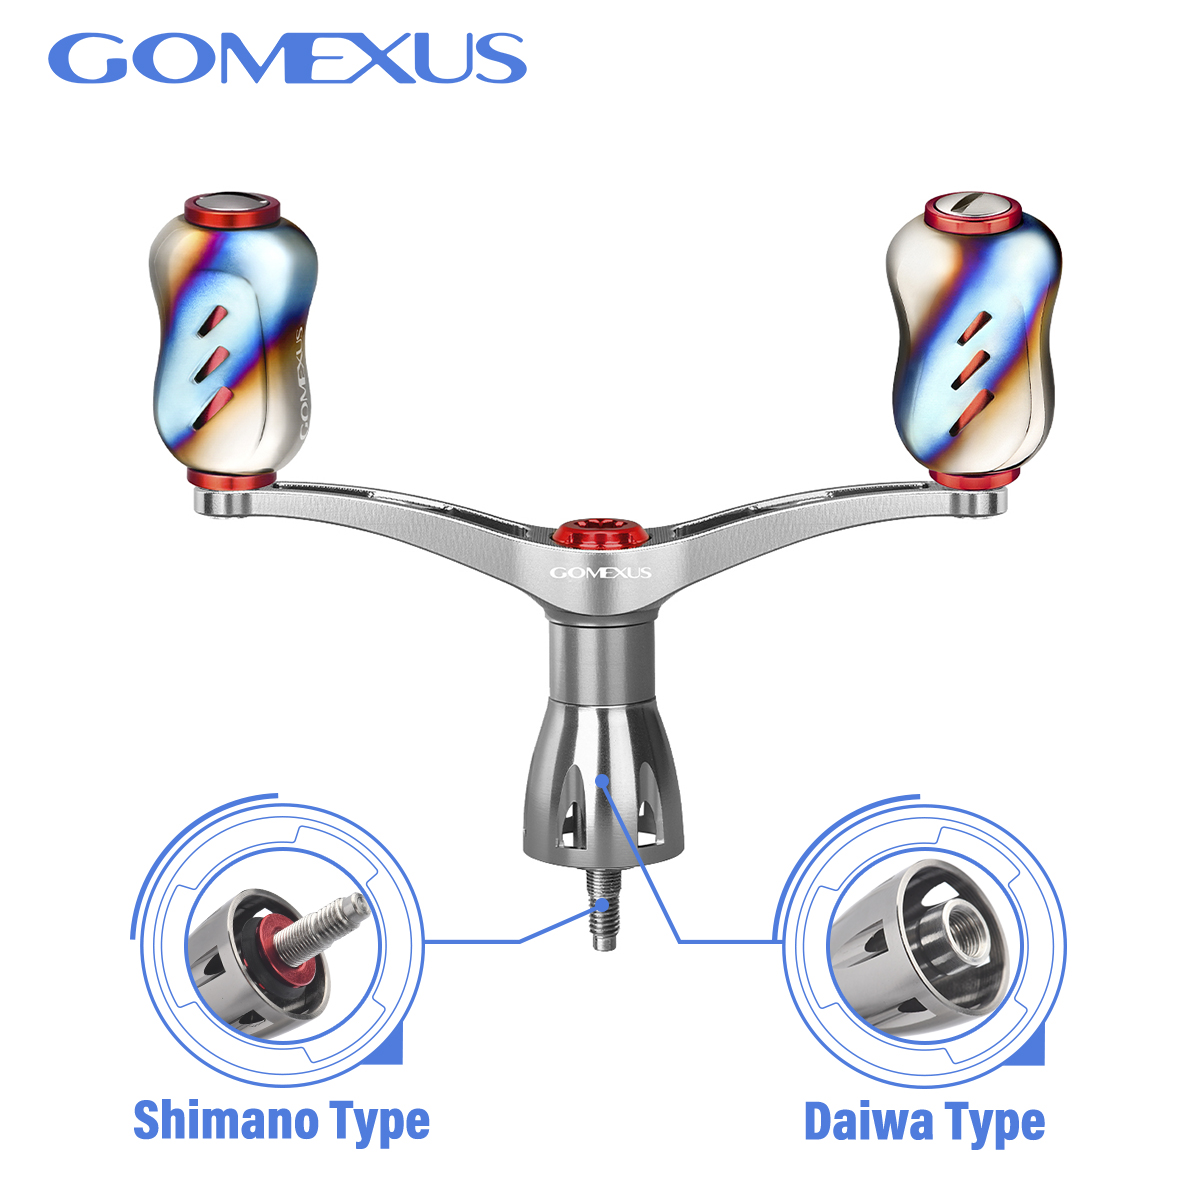 Gomexus 82-98mm Reel Double Handle with Titanium Knob for Shimano